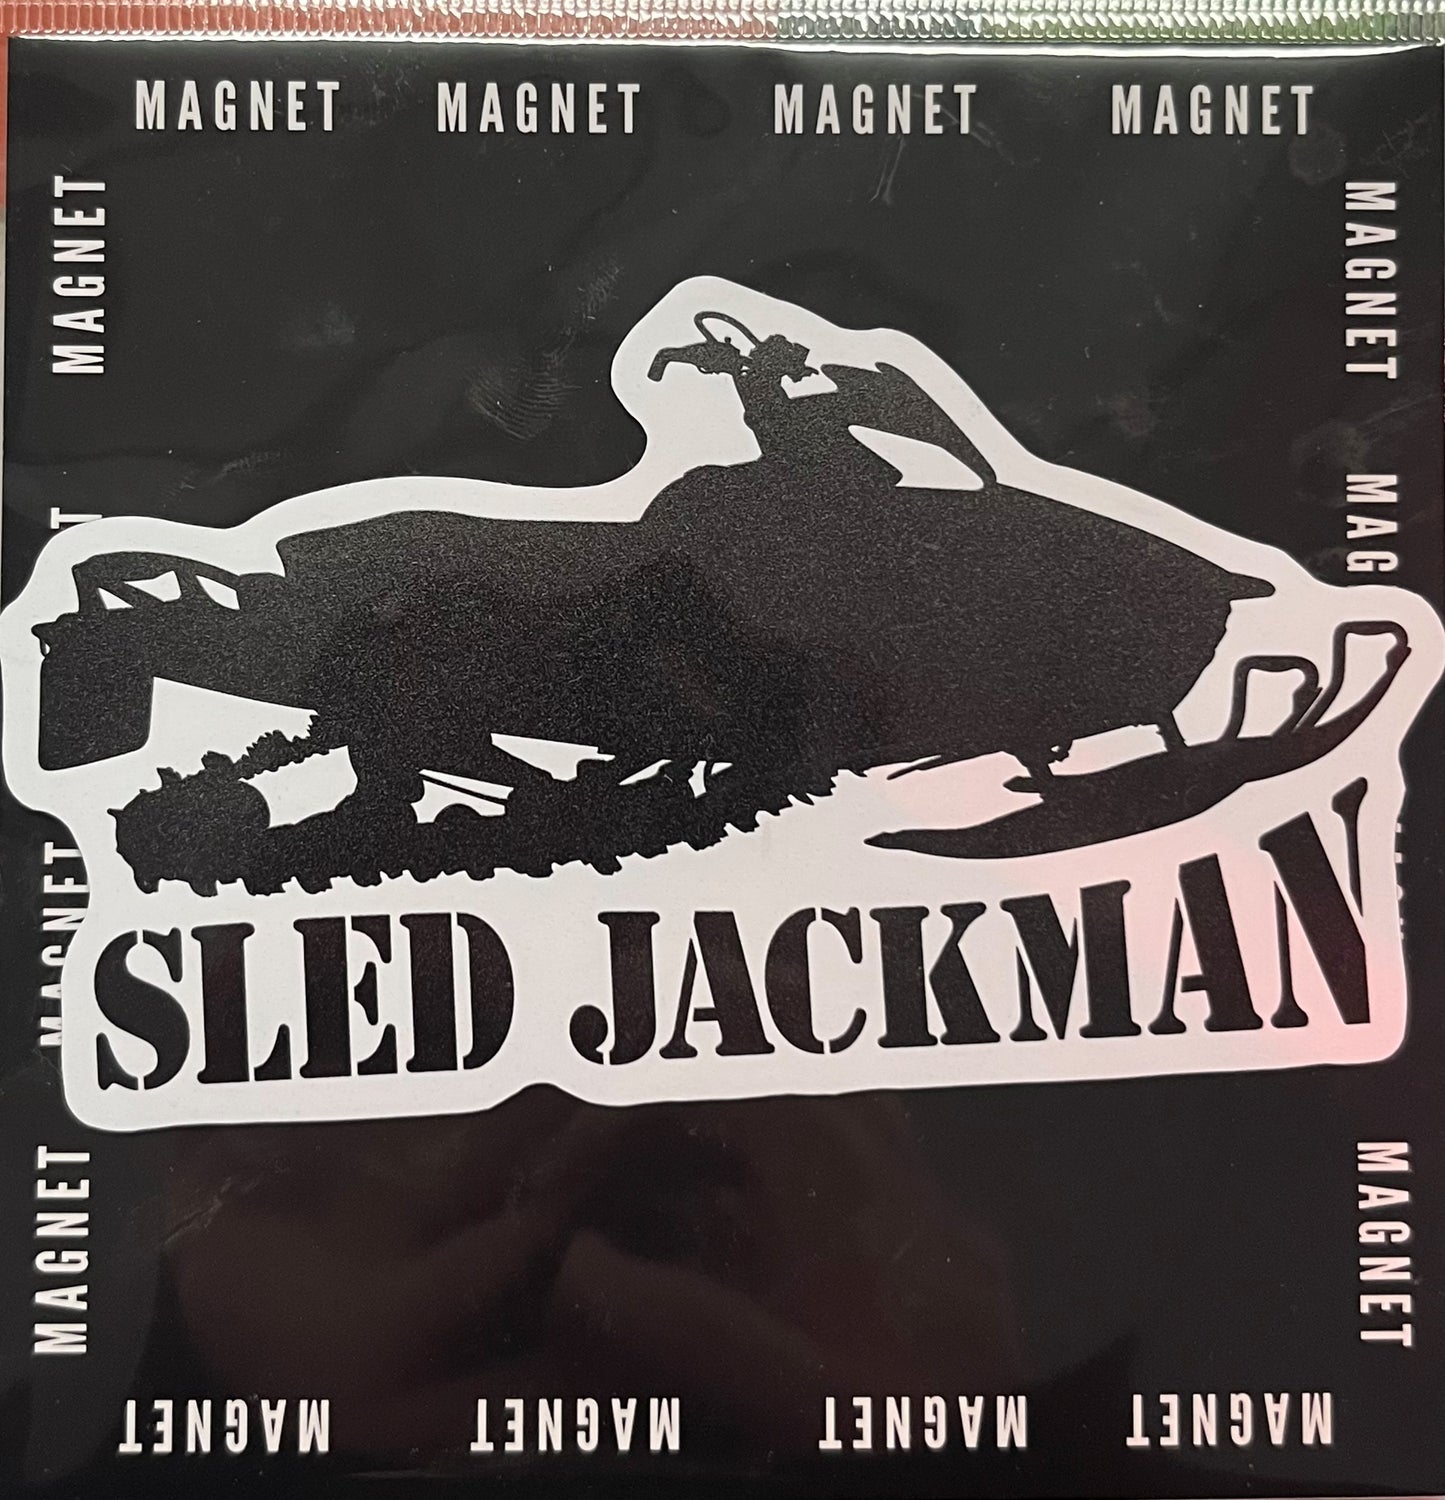 Jackman Maine Magnets